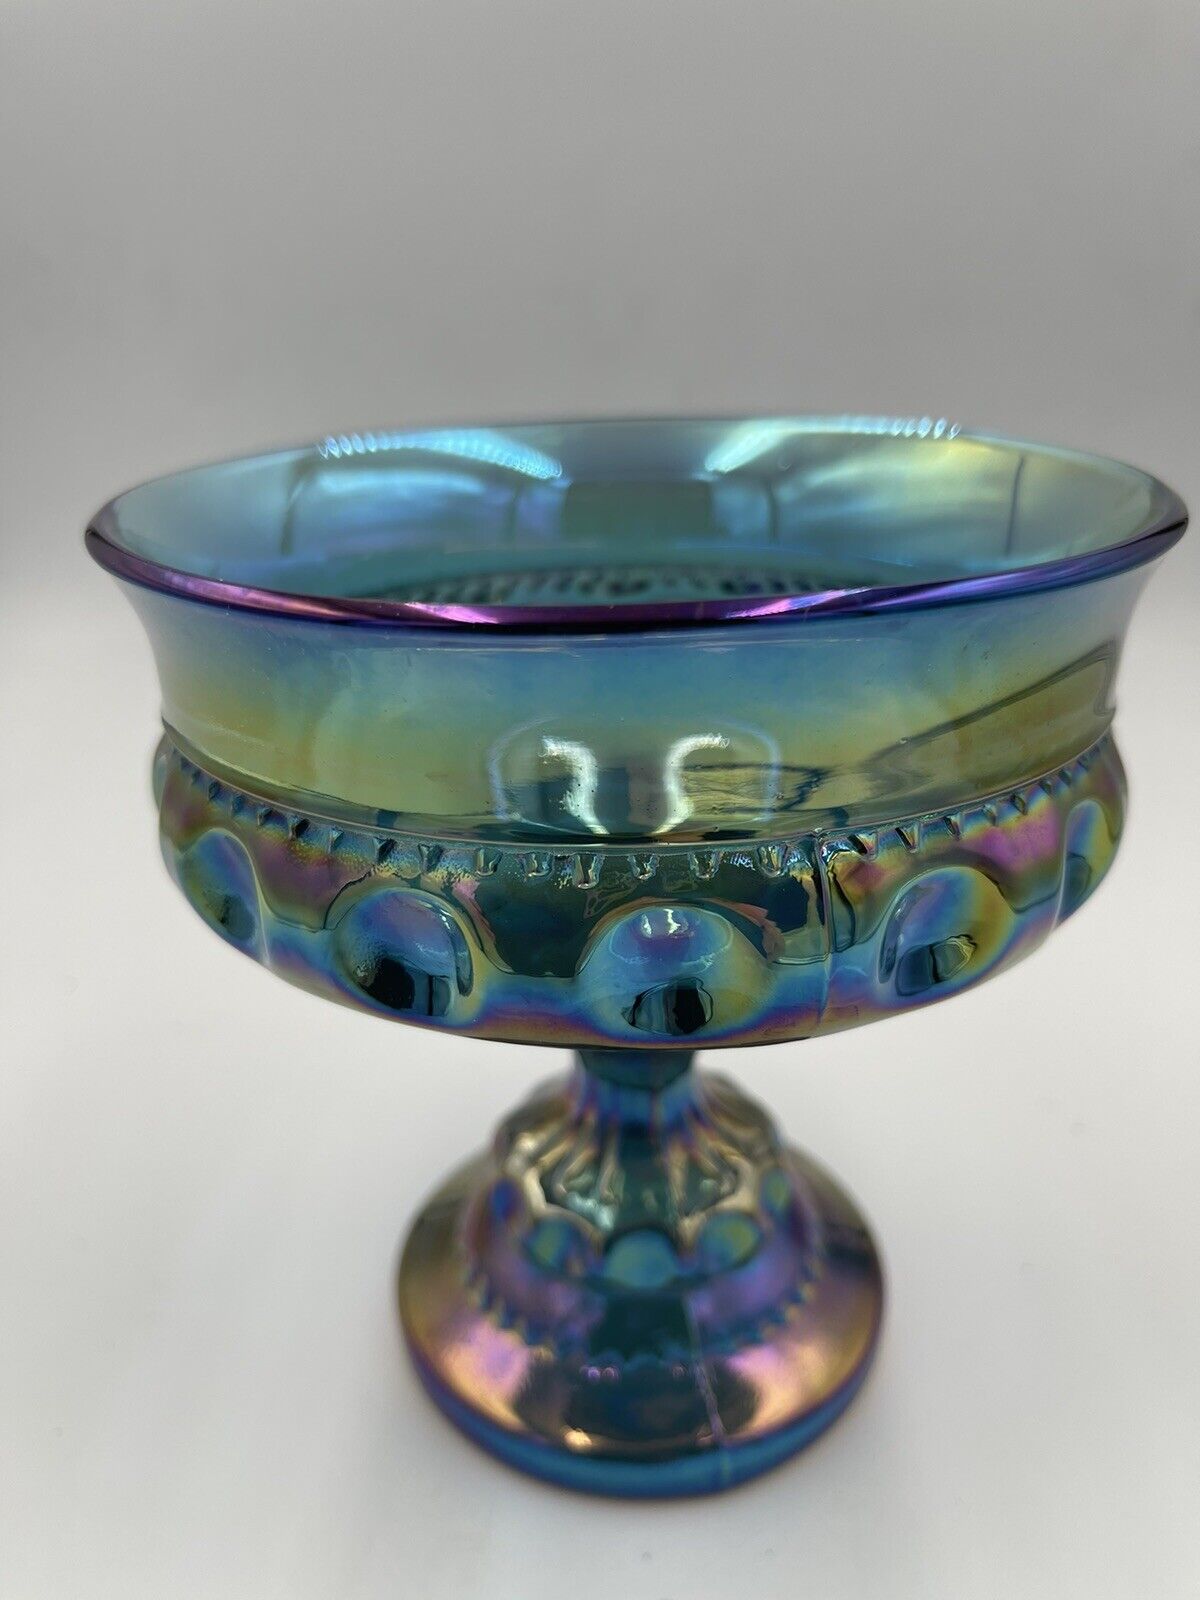 Iridiscent Blue Kings Crown Carnival Glass Pedestal Thumb Print Compote Dish VTG